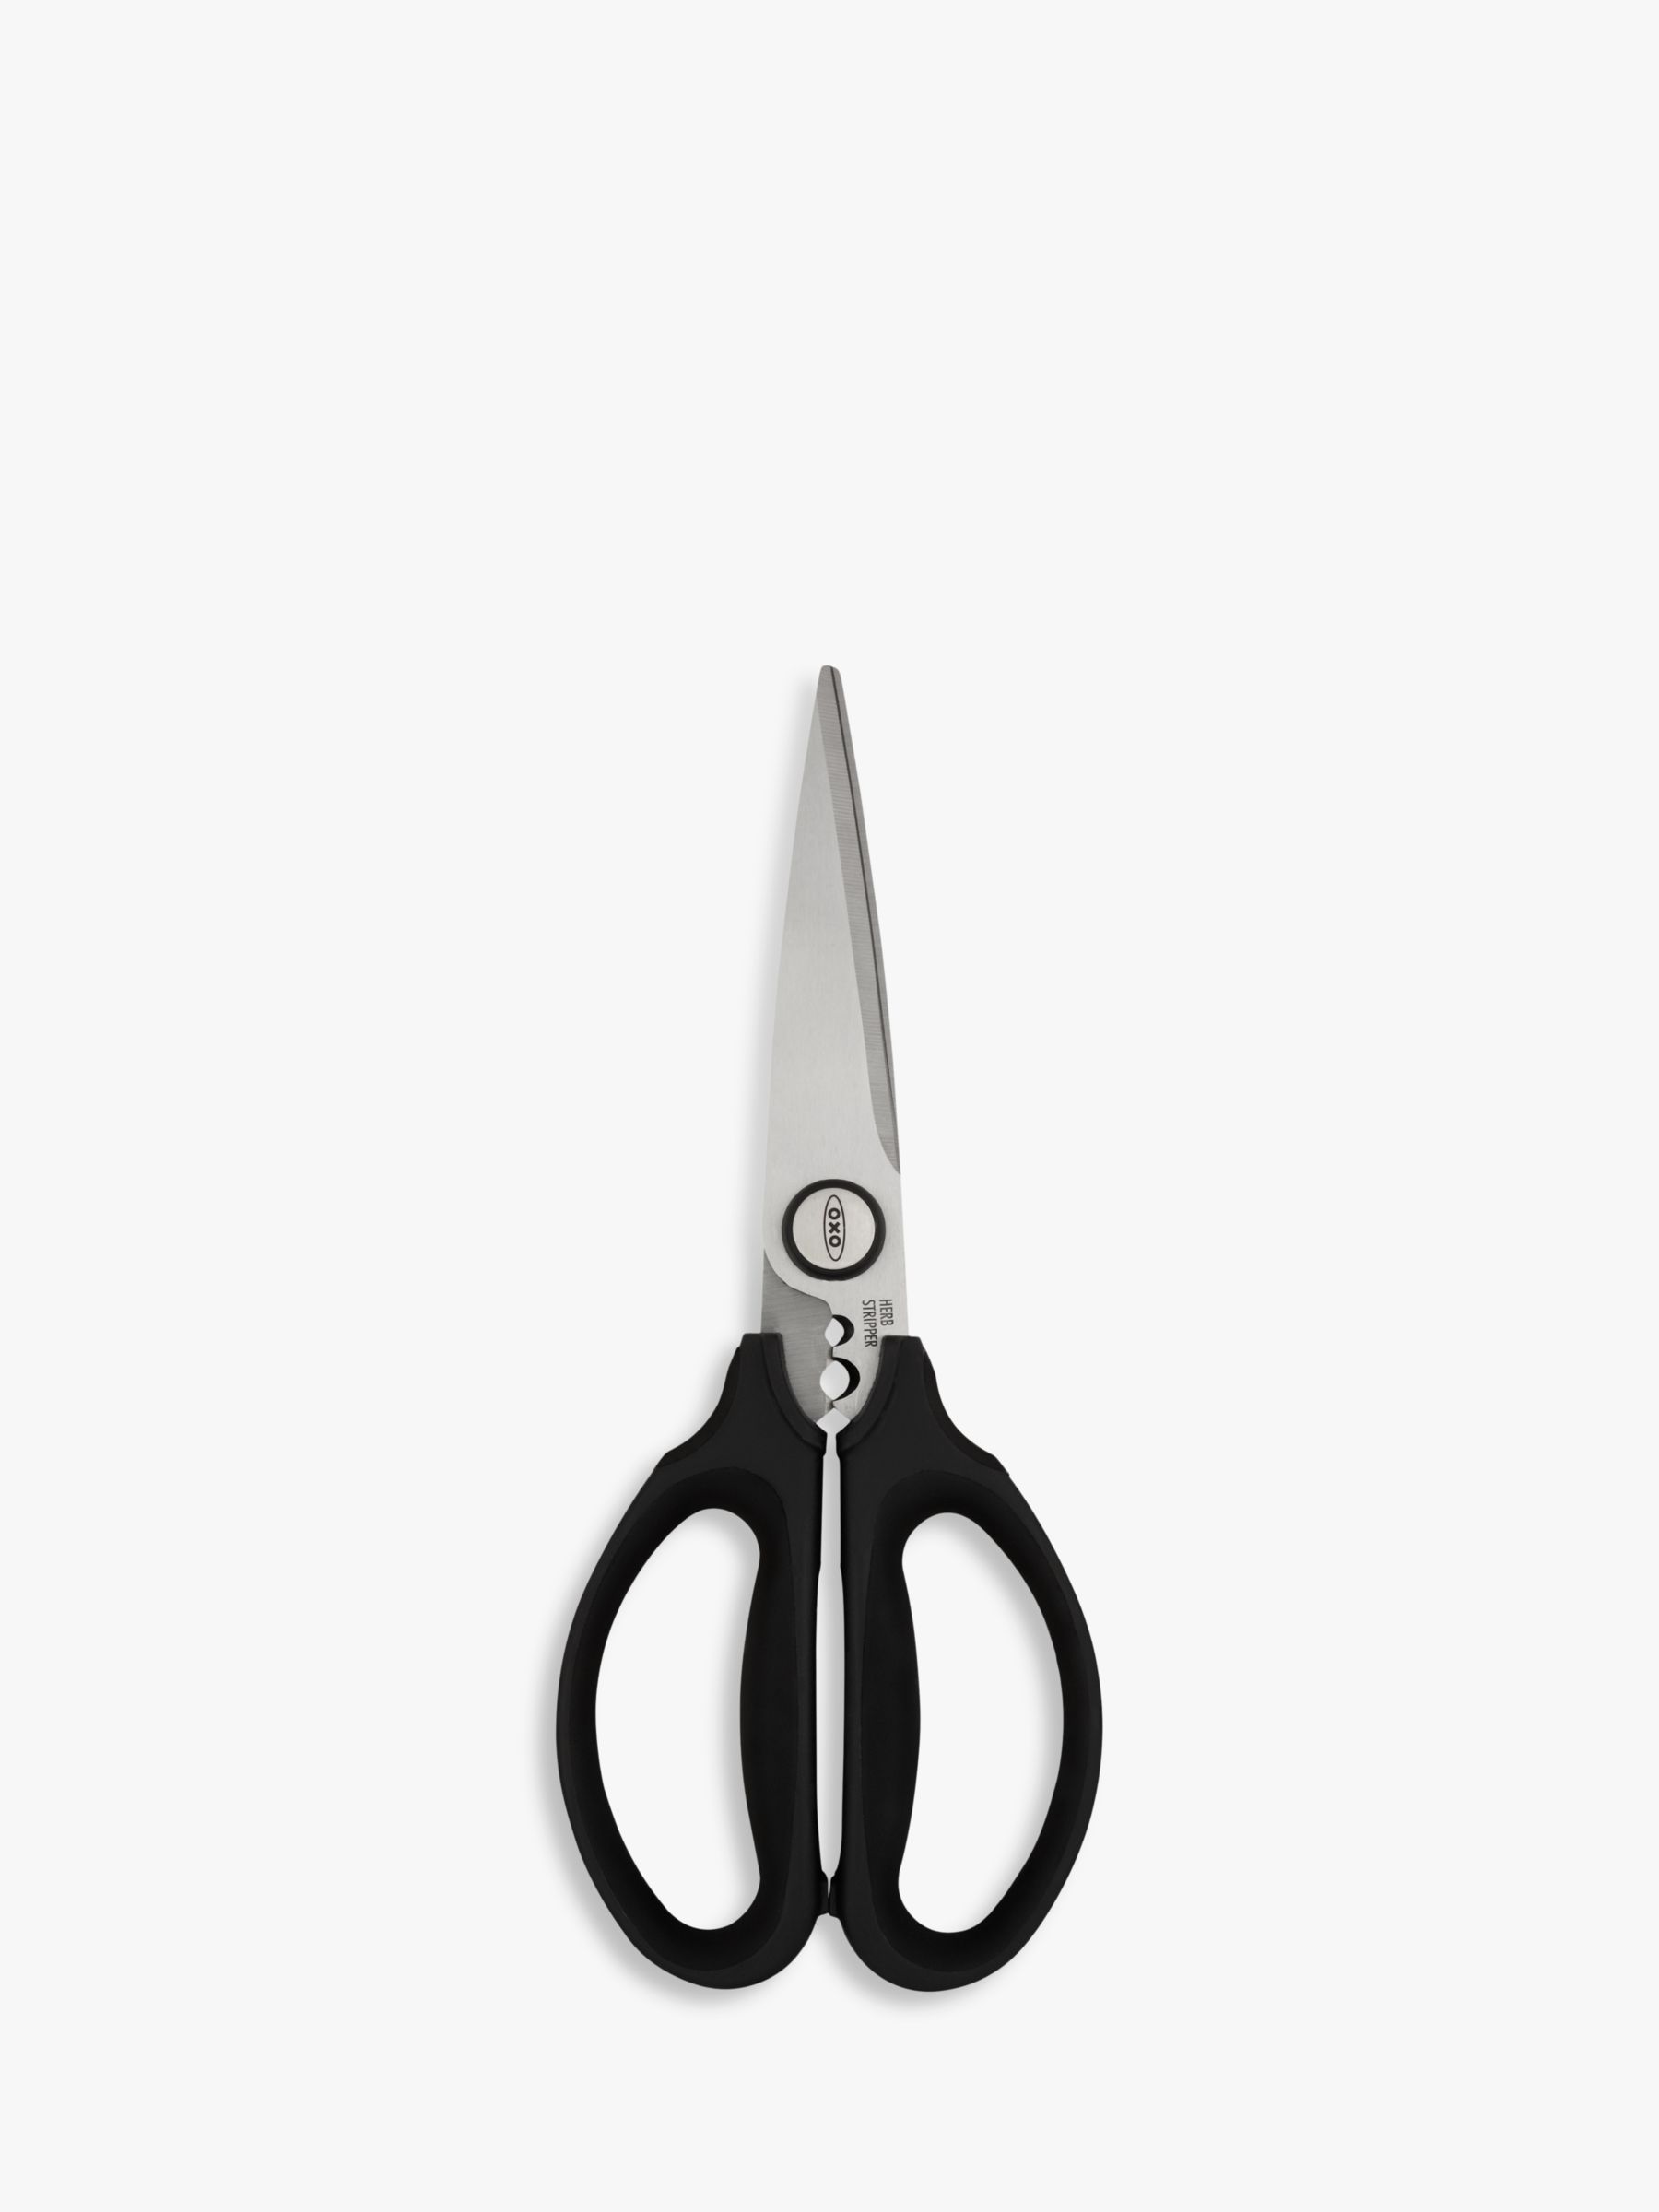 OXO Kitchen Scissors with Herb Stripper – Kooi Housewares